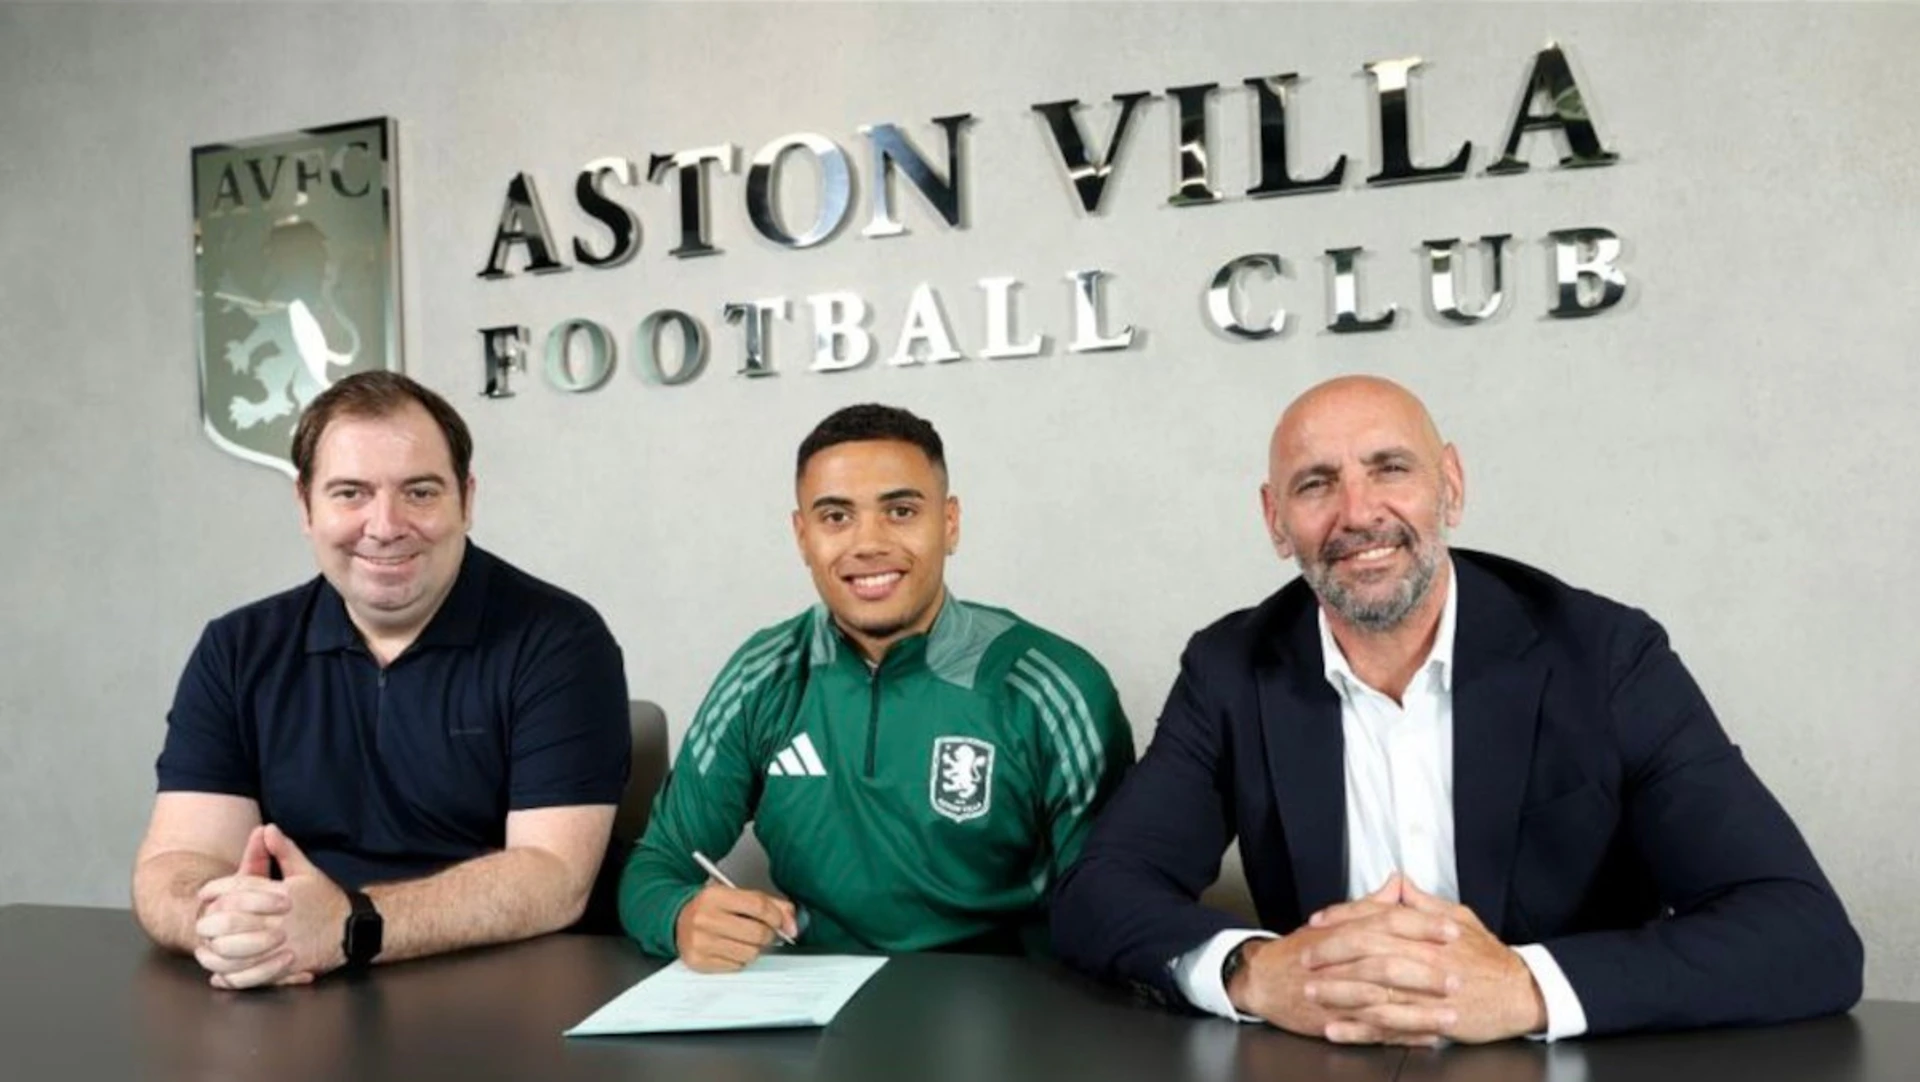 Aston Villa sign forward Dobbin from Everton